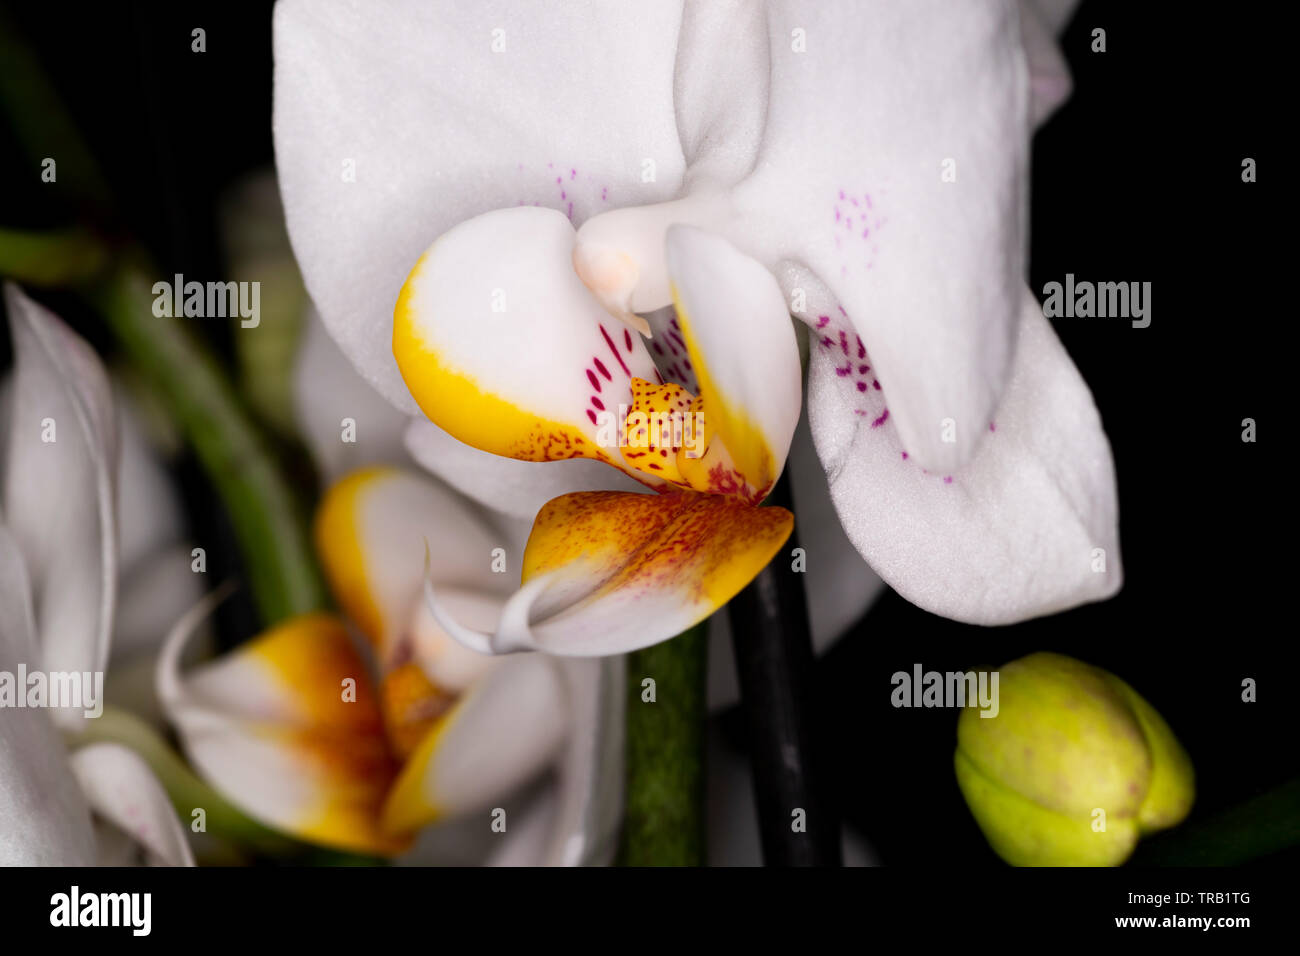 Mini Orchid Ceramic flower head, genus Orchidaceae, macro with shallow depth of field Stock Photo